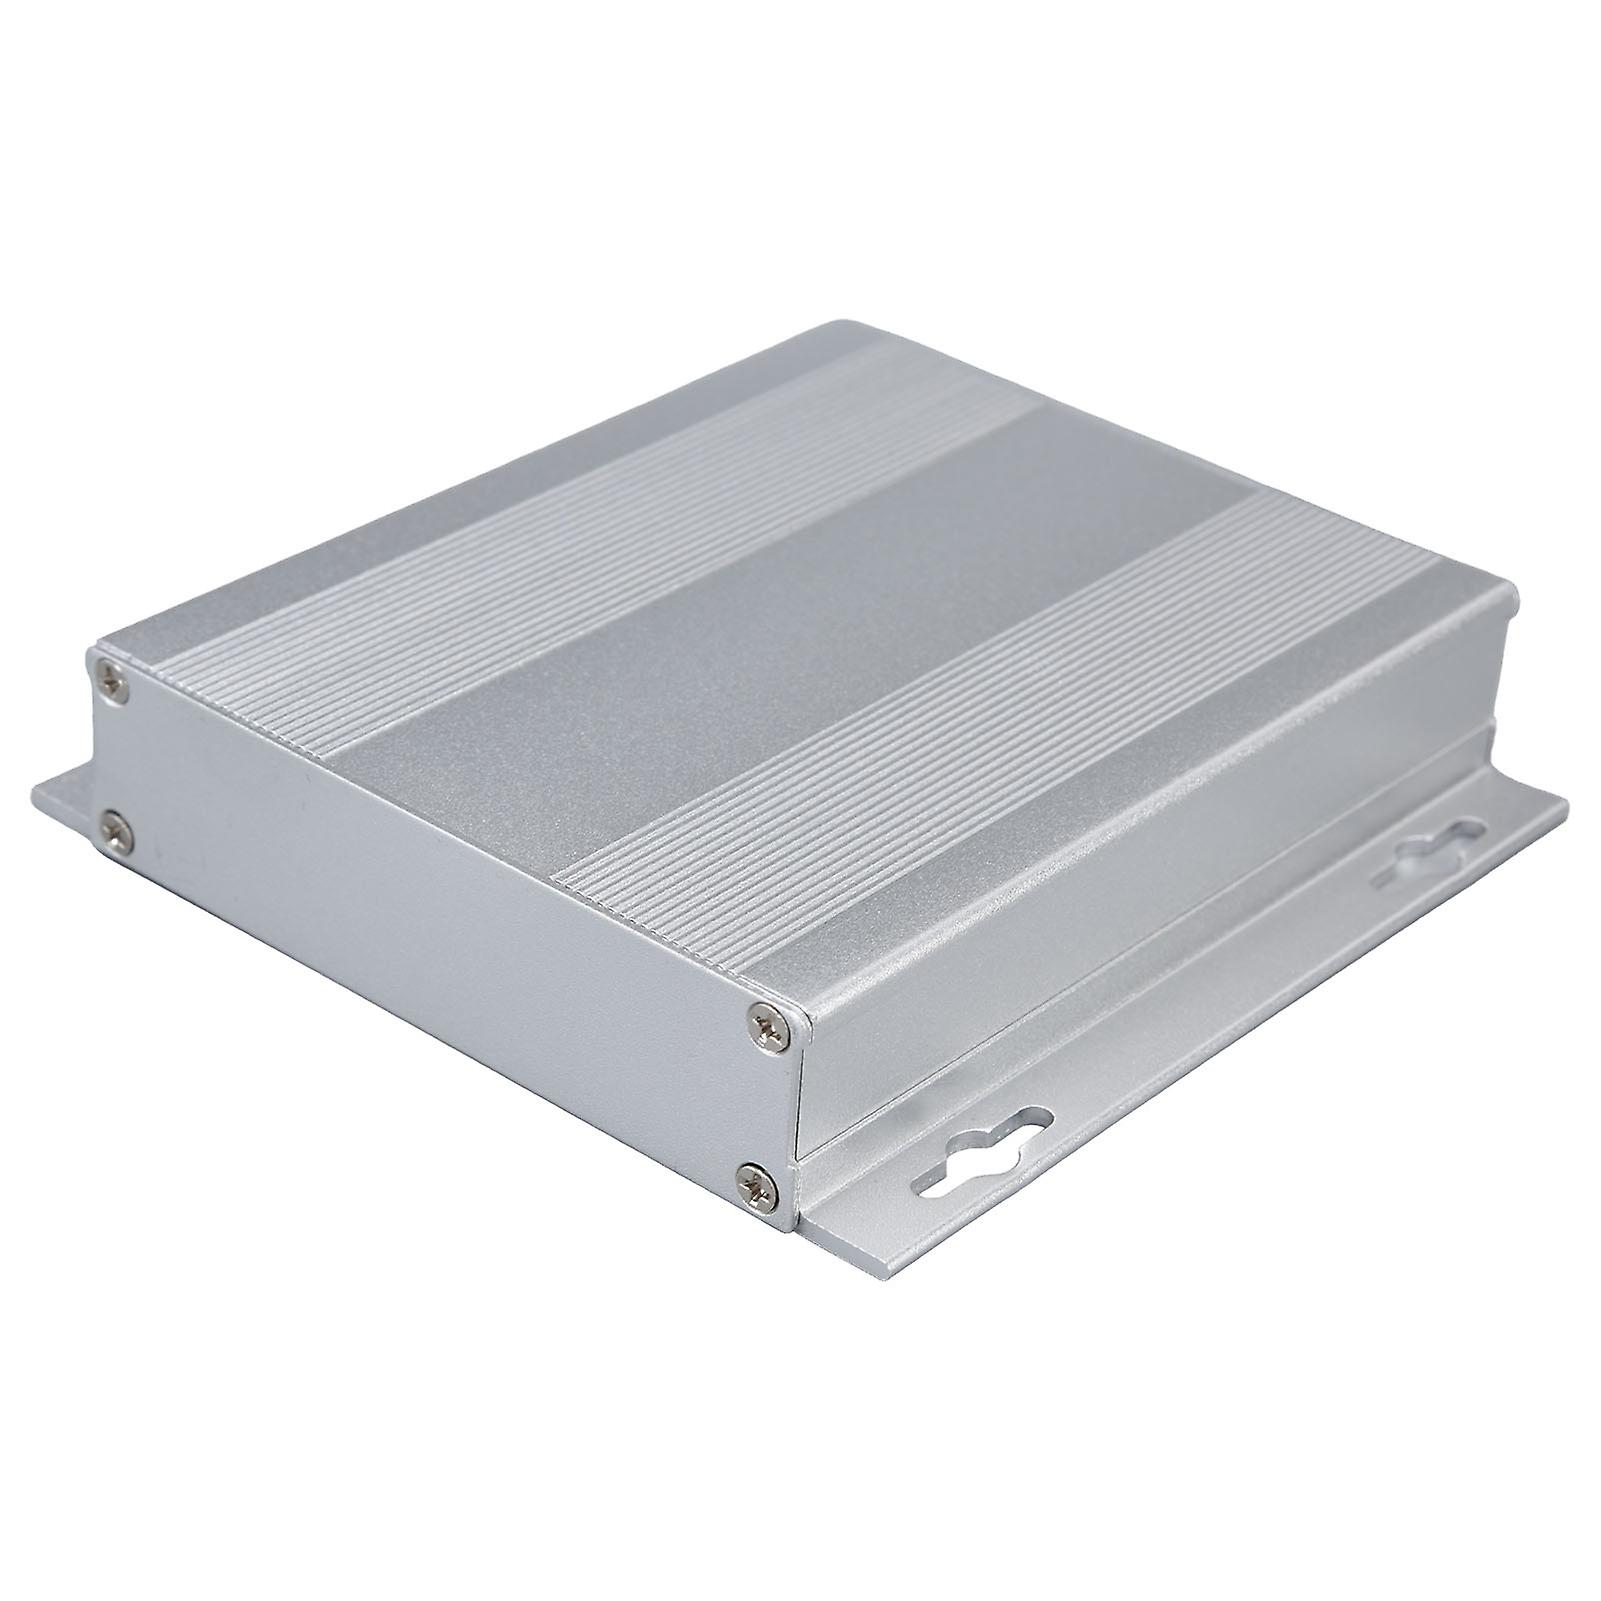 Aluminum Alloy Project Box Amplifier Circuit Board Housing Diy Electronic Junction Enclosure